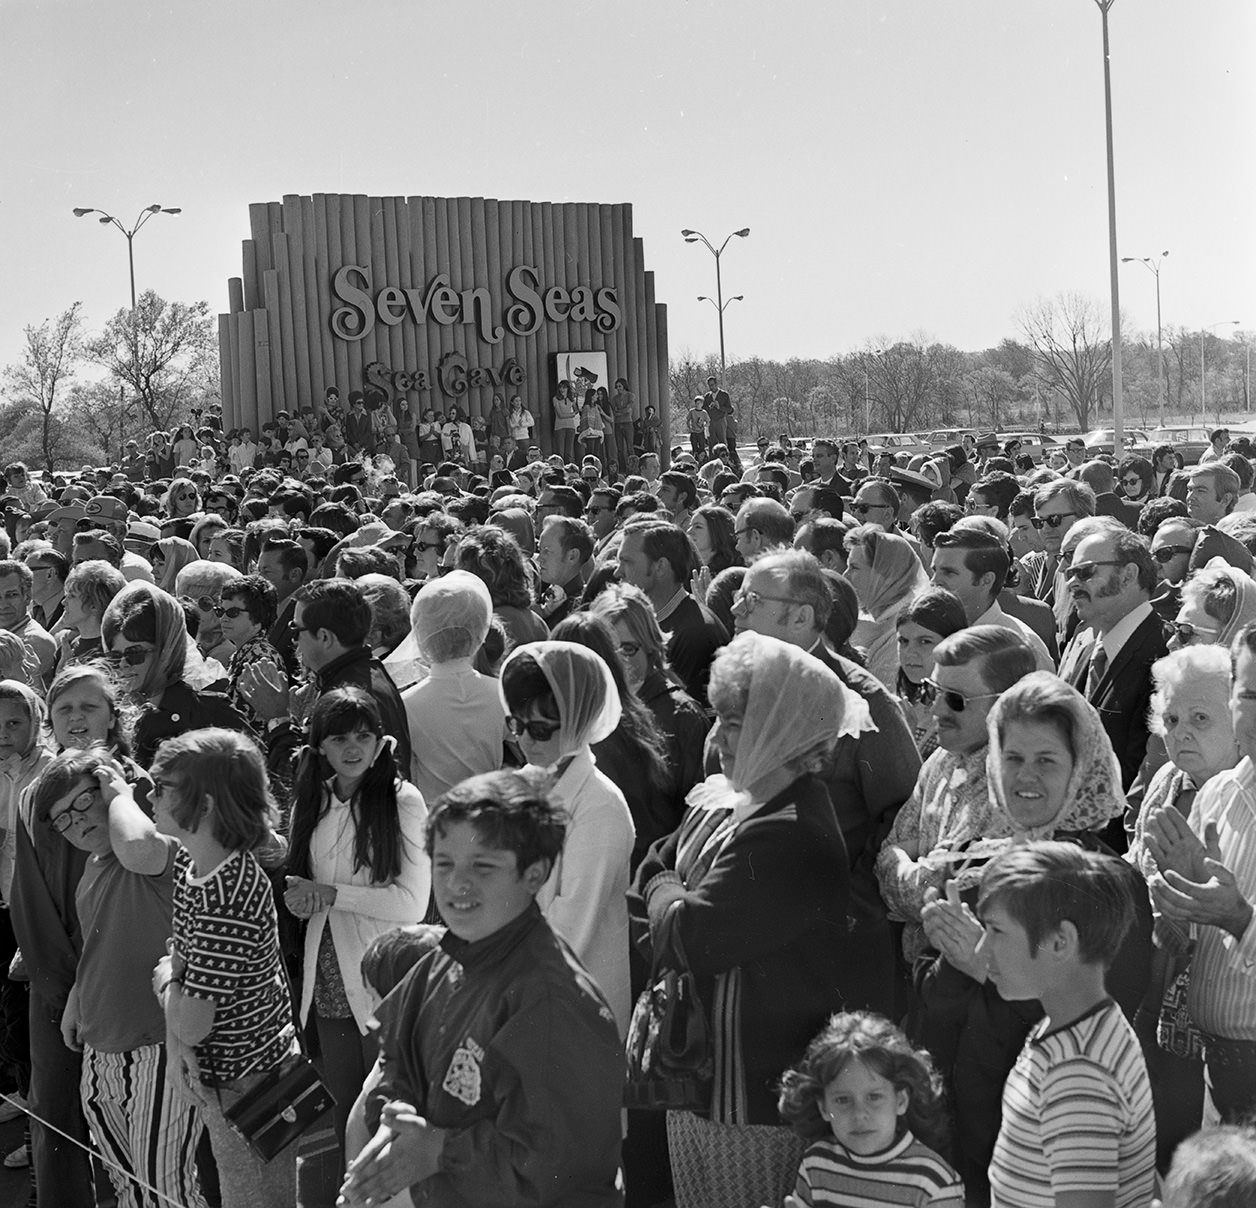 Crowd at Seven Seas, Arlington, Texas, 1972